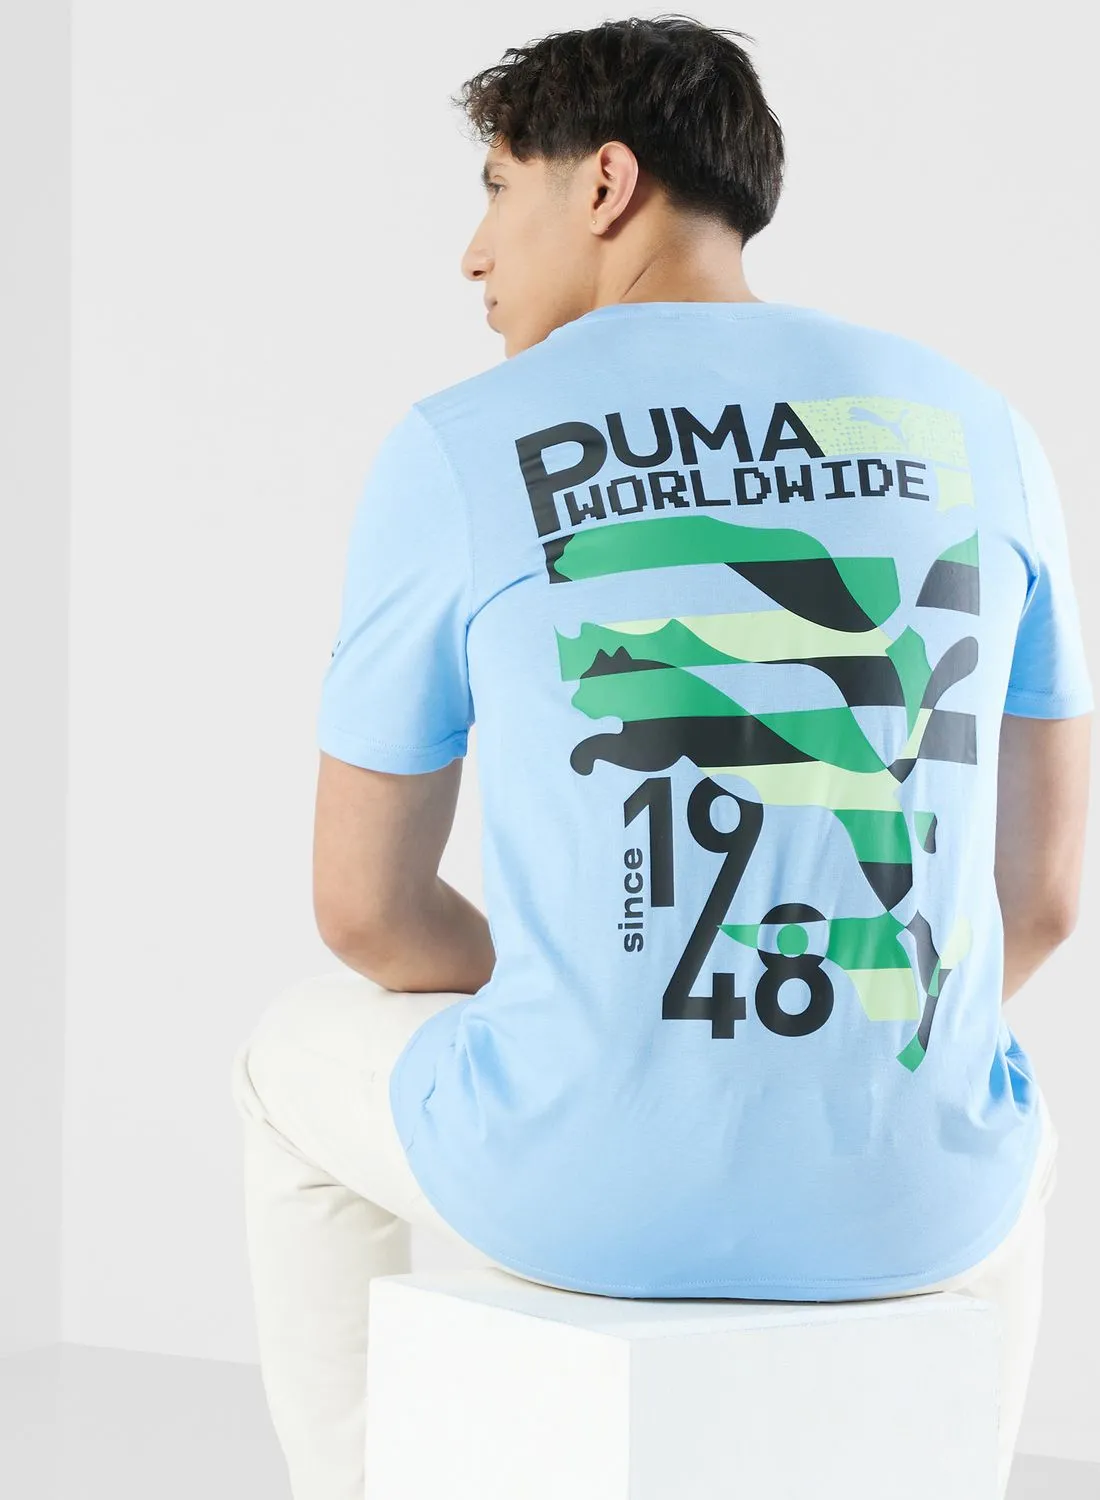 PUMA Worldwide Graphic T-Shirt